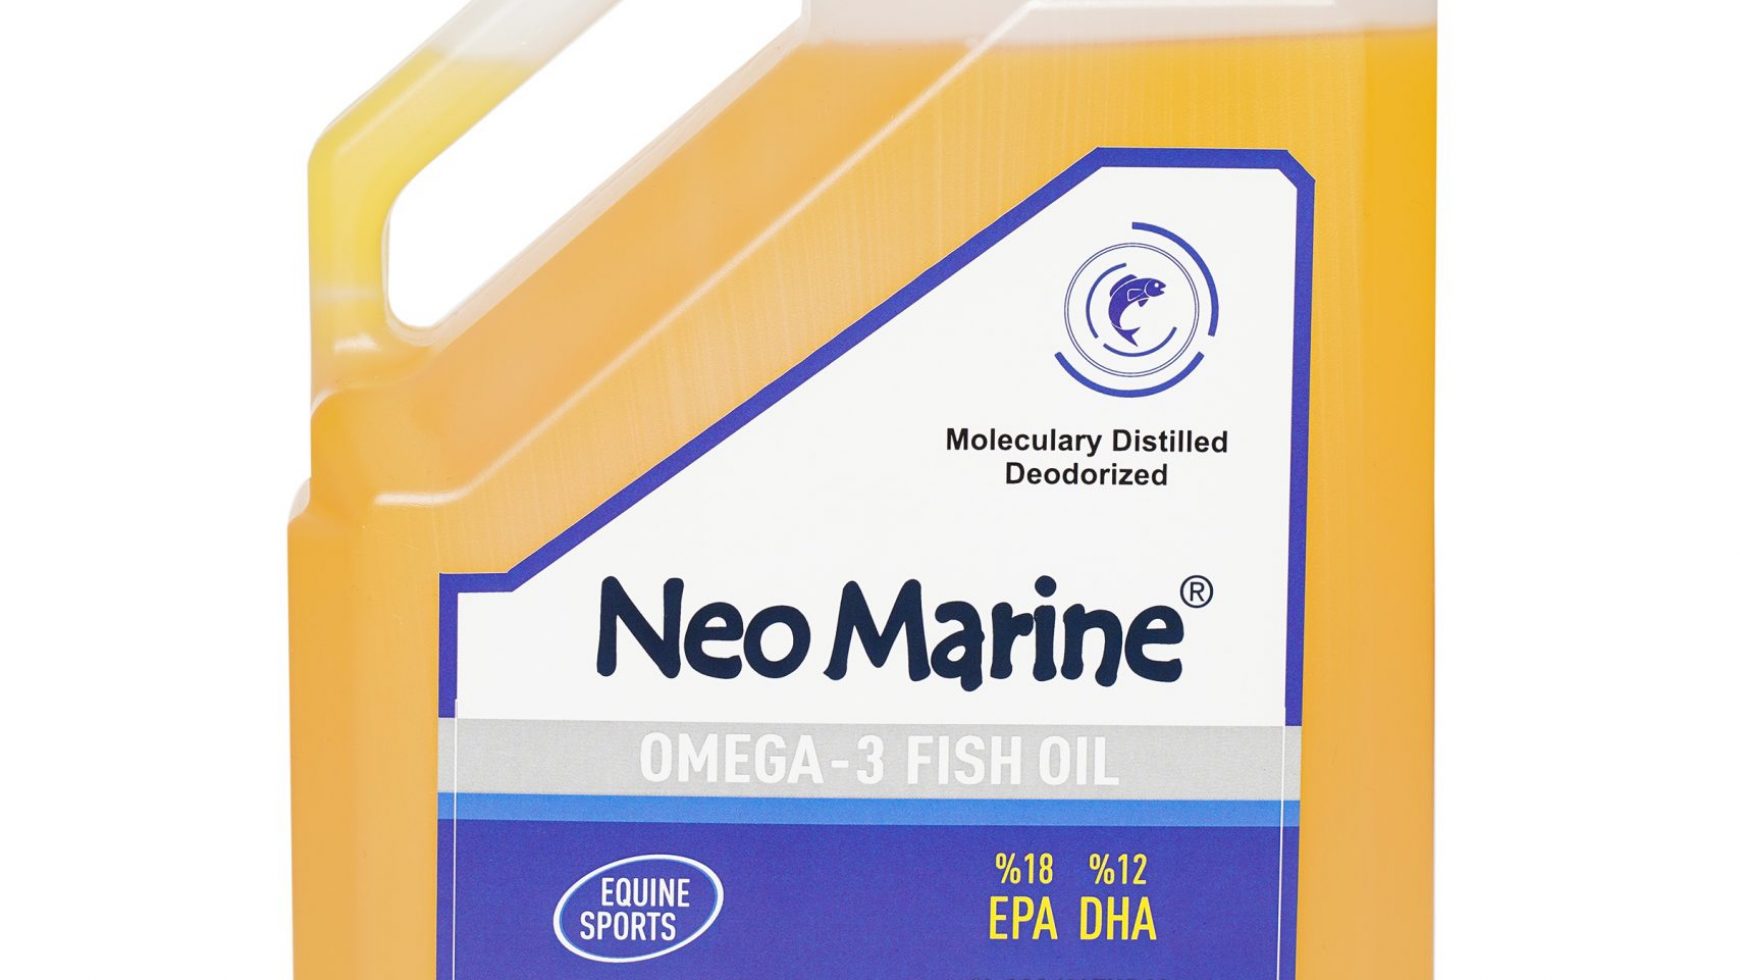 NEO MARINE OMEGA-3 FISH OIL